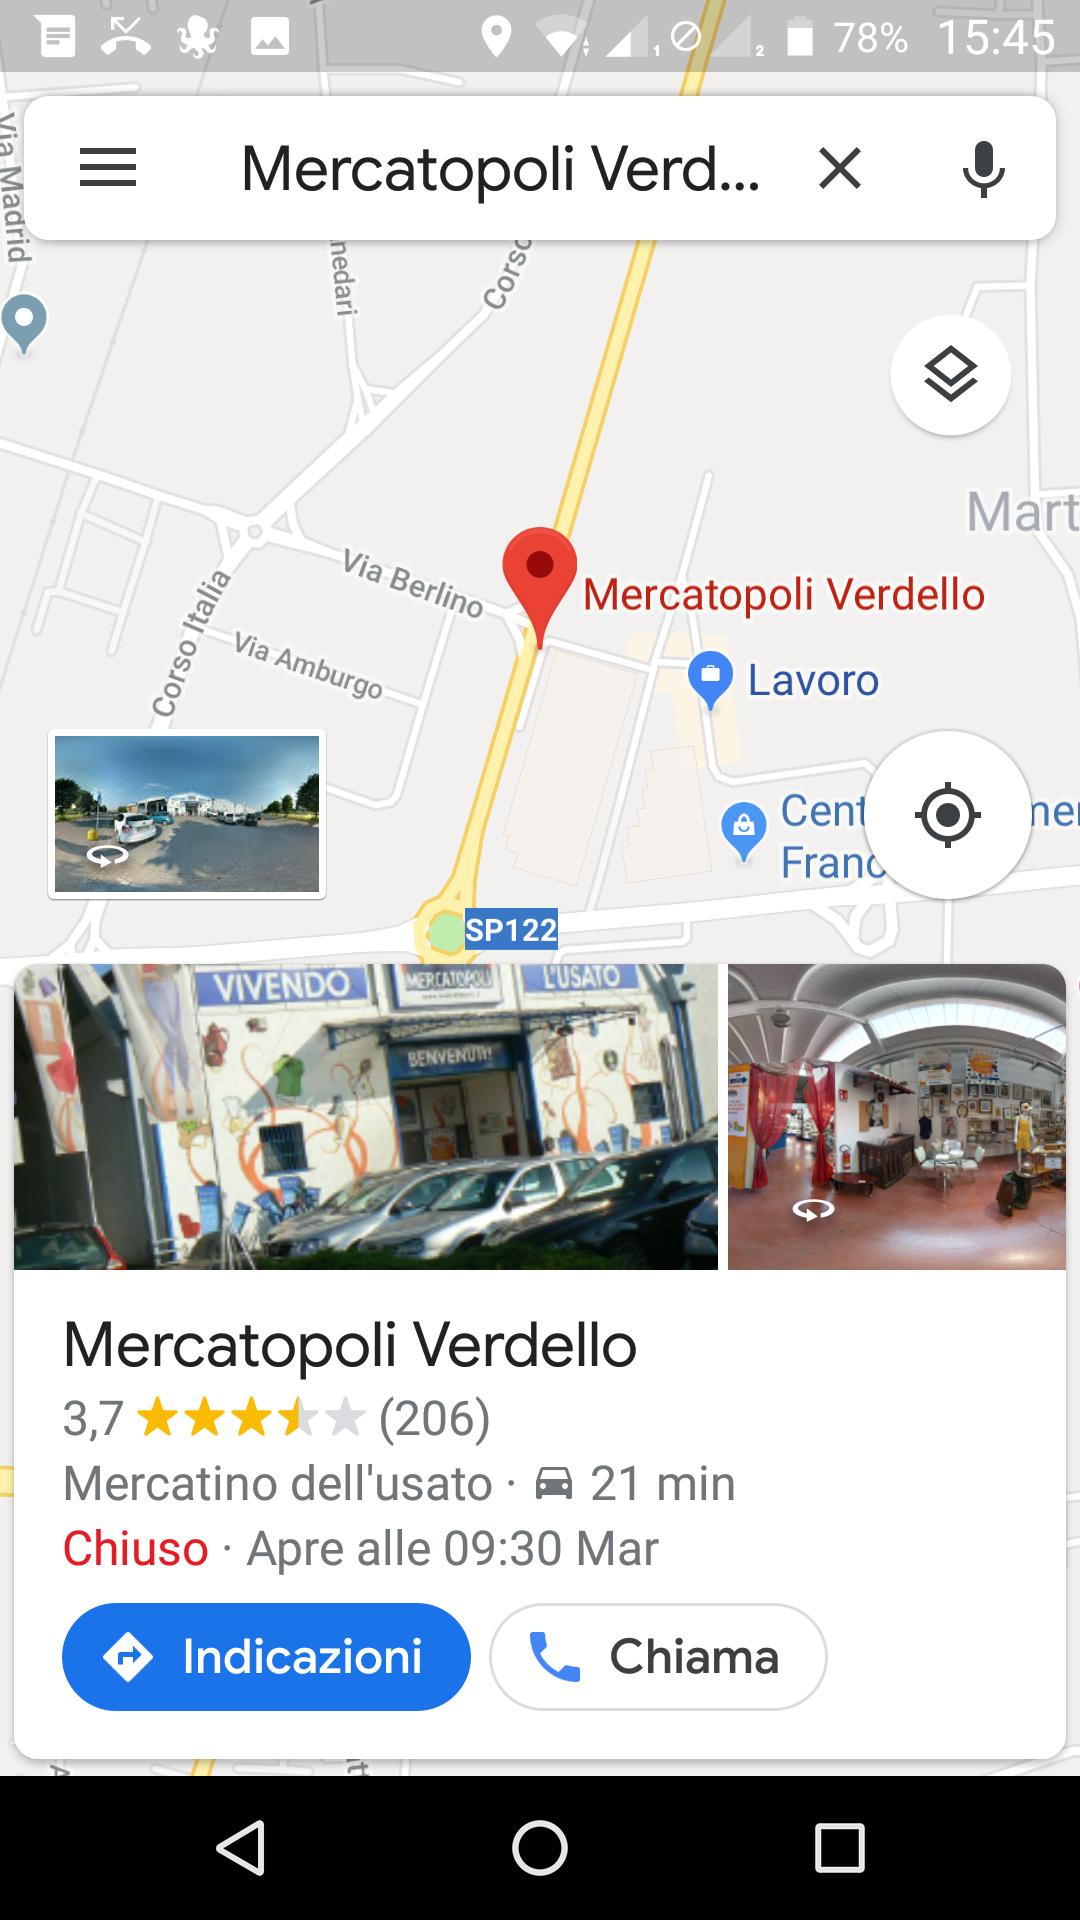 Mercatopoli Verdello for Android - APK Download